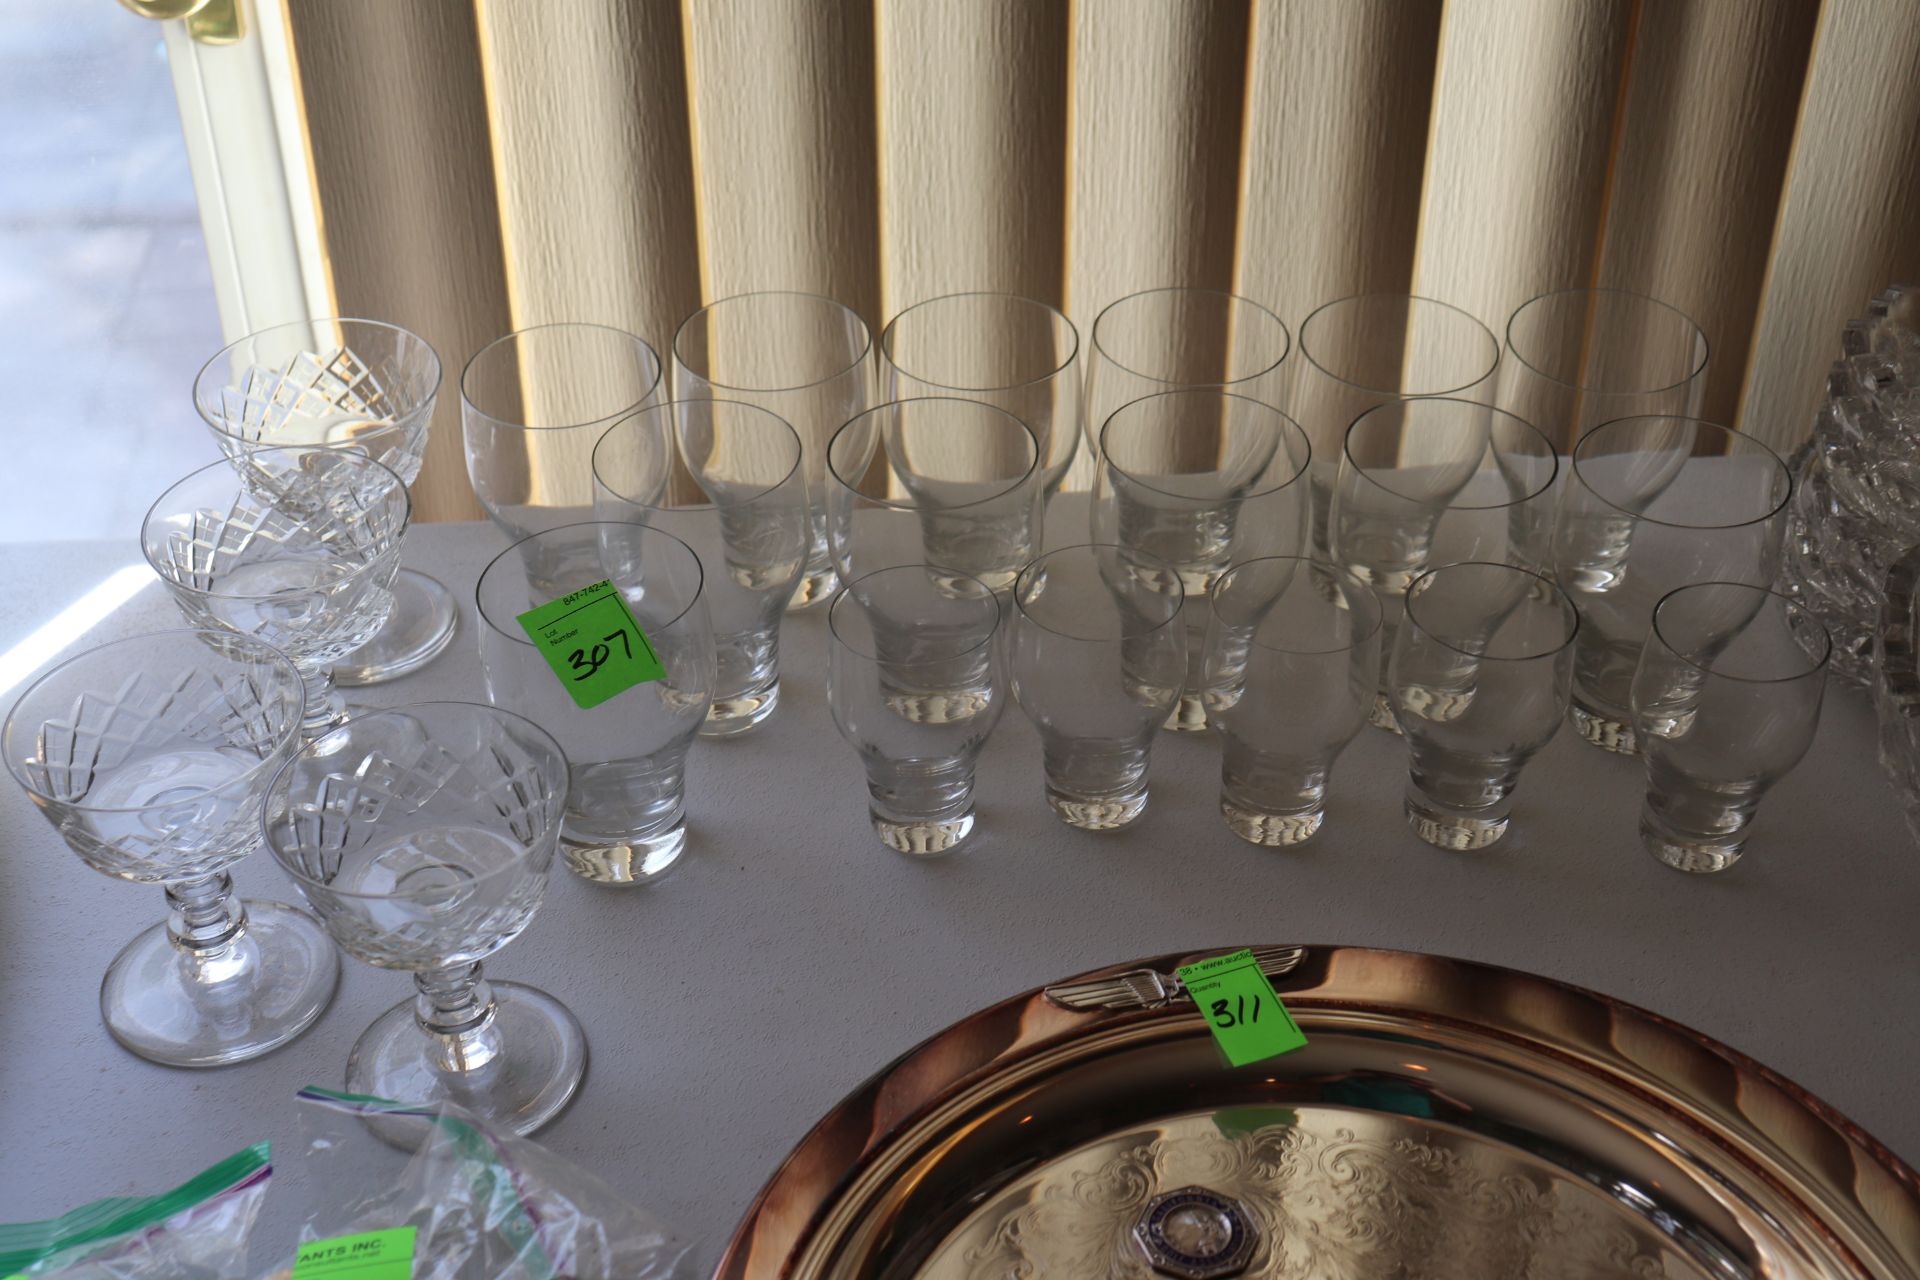 Assortment of wine glasses